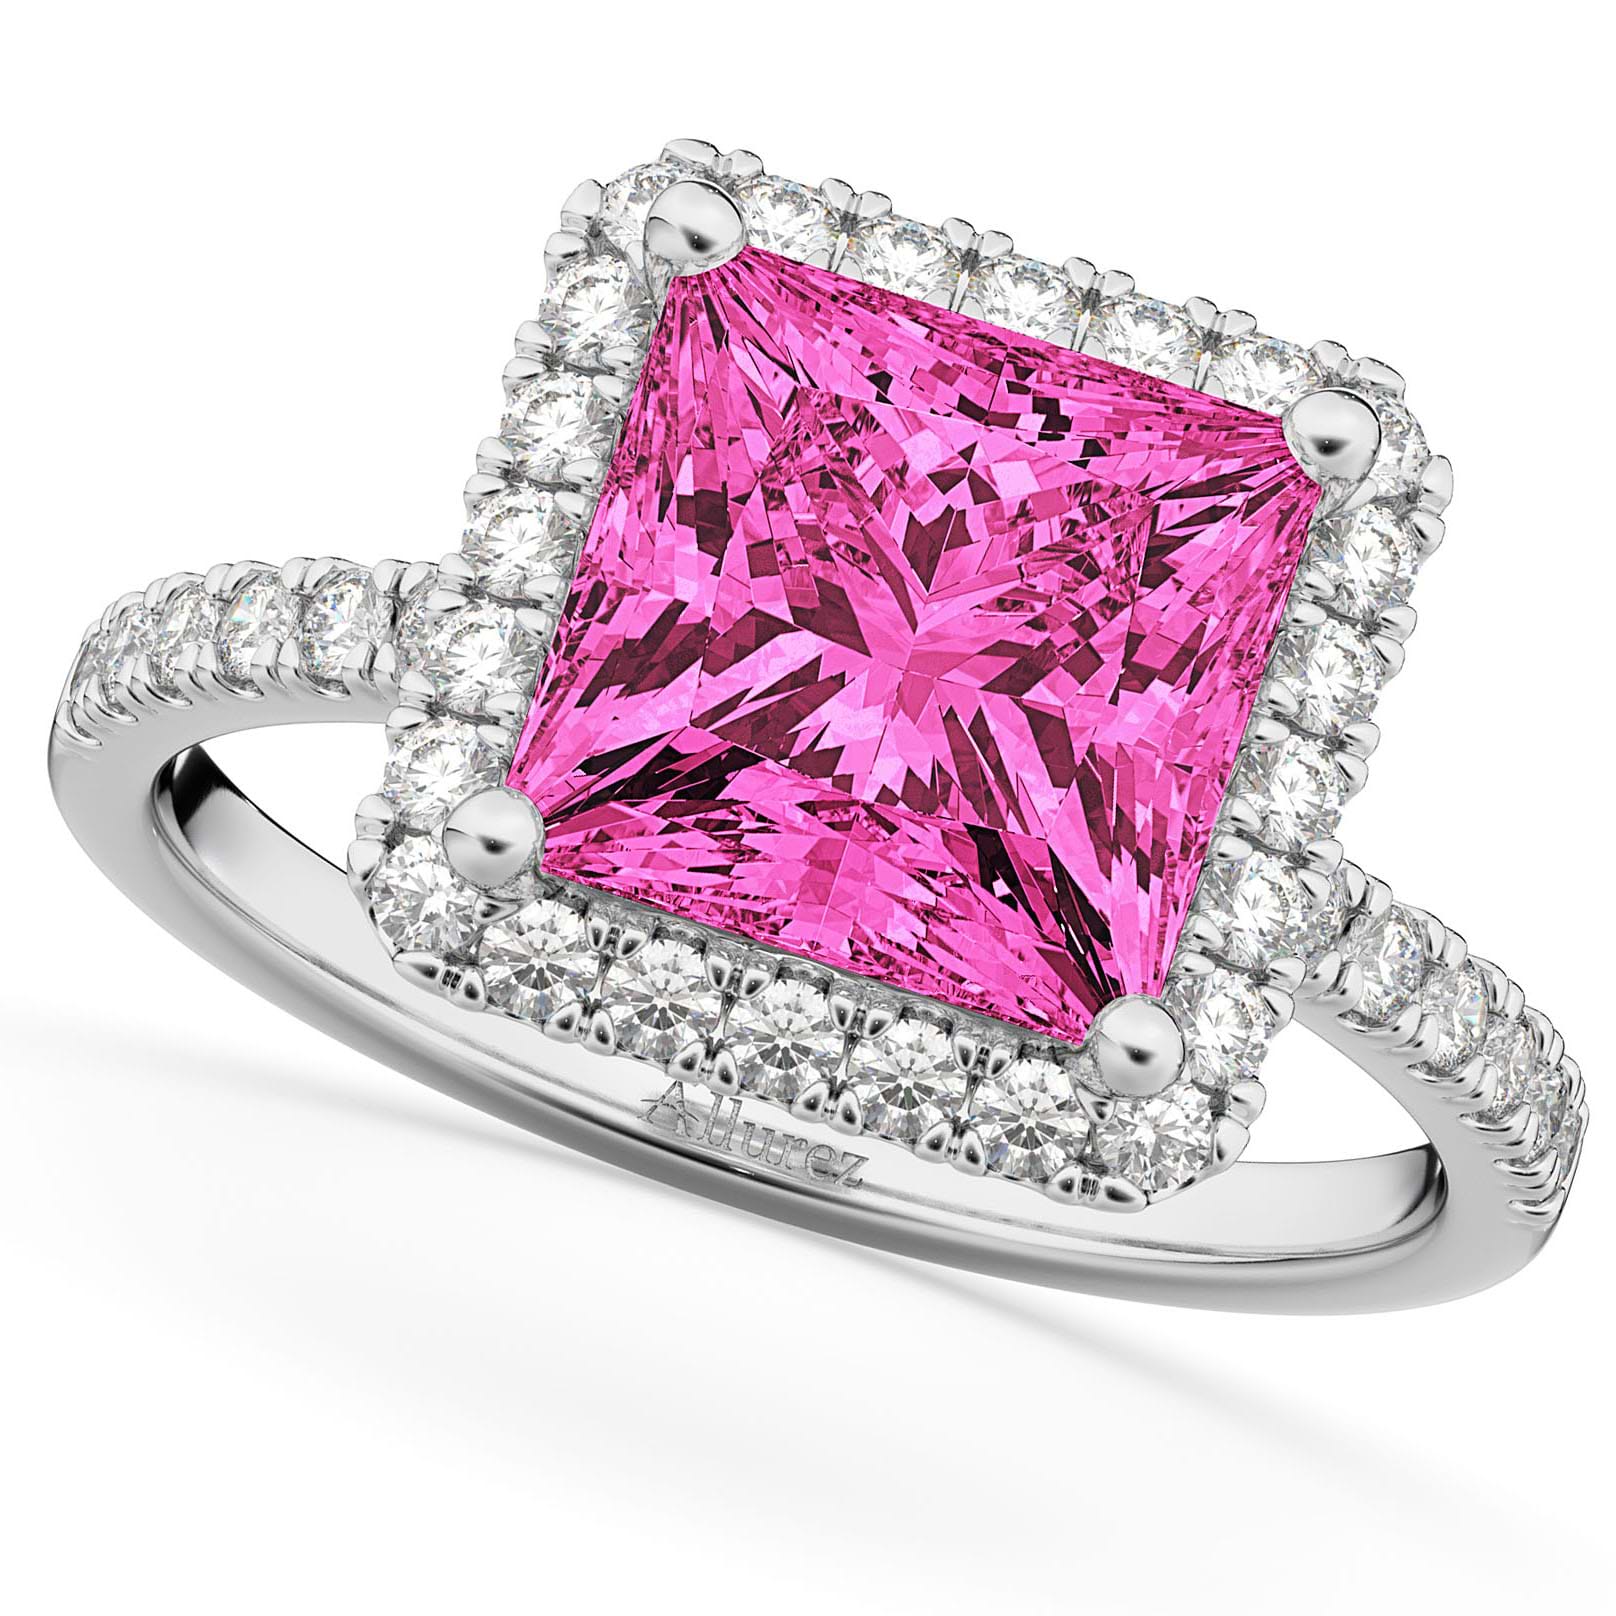 Princess Cut Halo Pink Tourmaline & Diamond Engagement Ring 14K White Gold 3.47ct